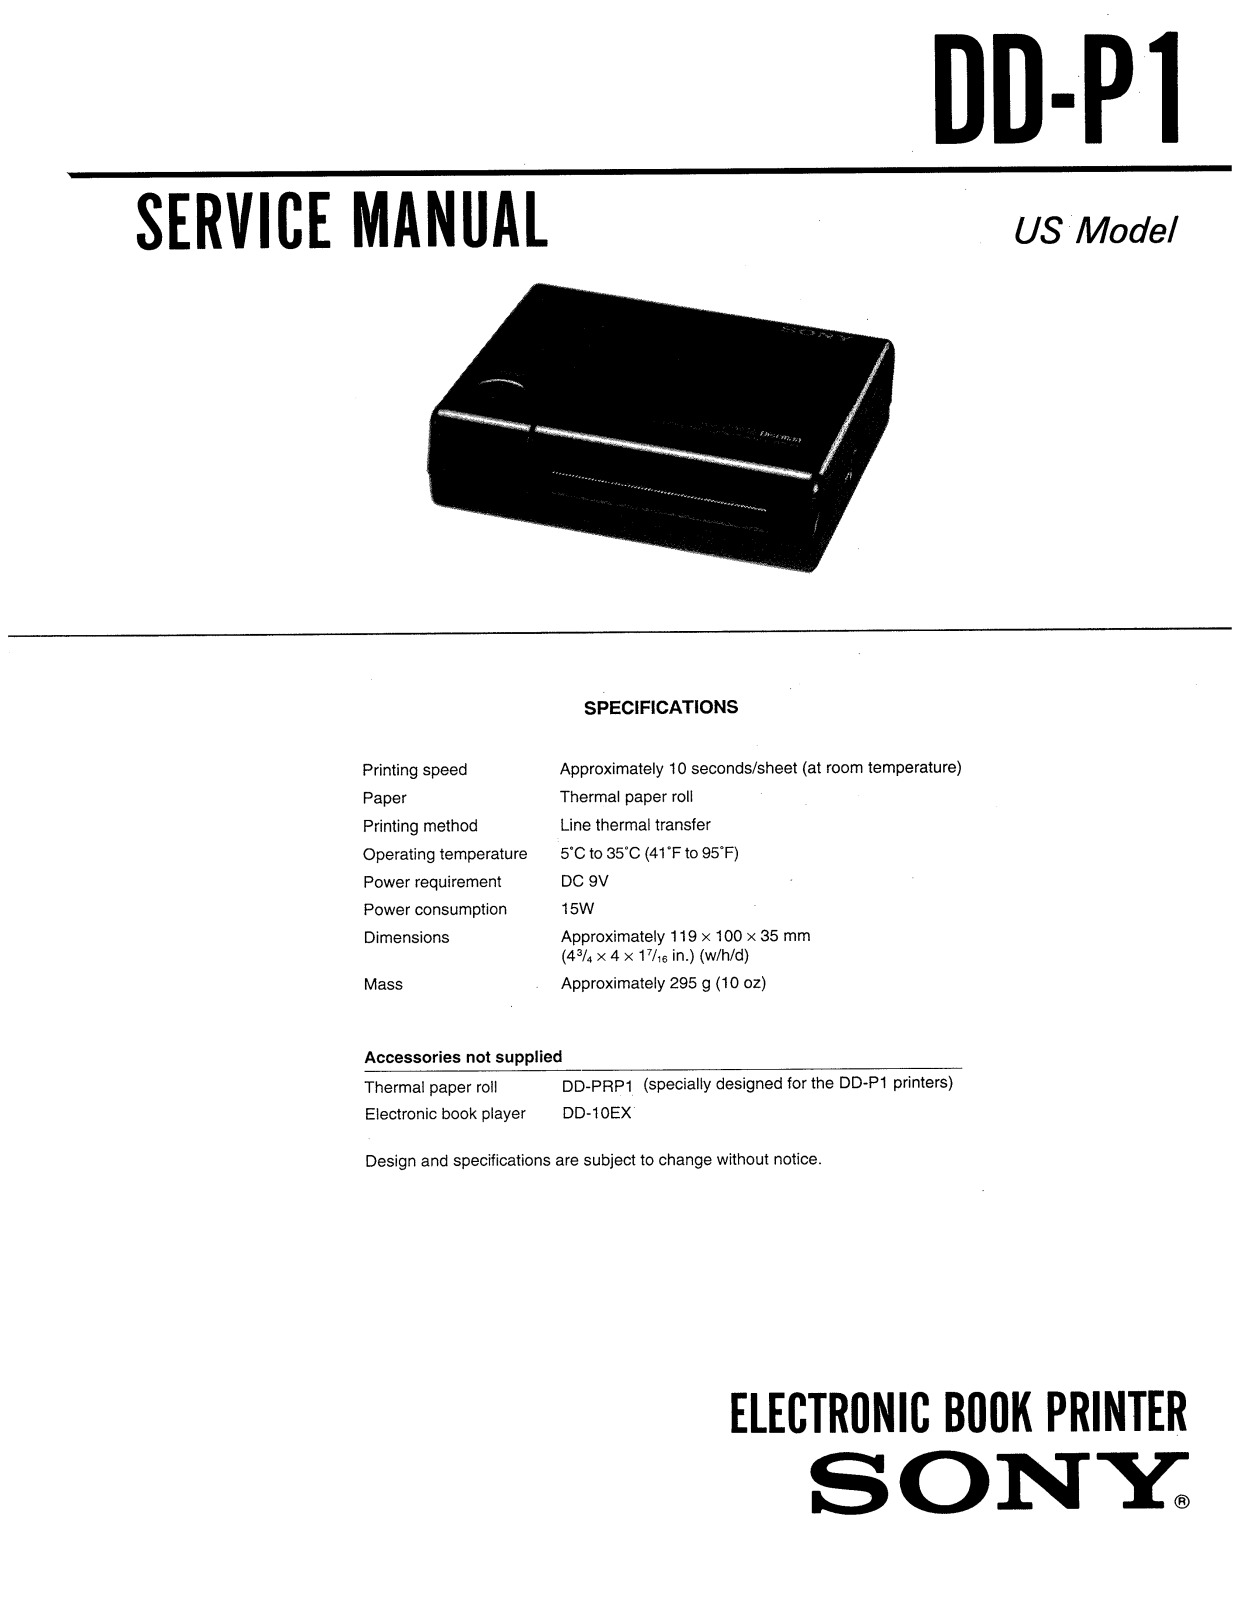 Sony DDP-1 Service manual